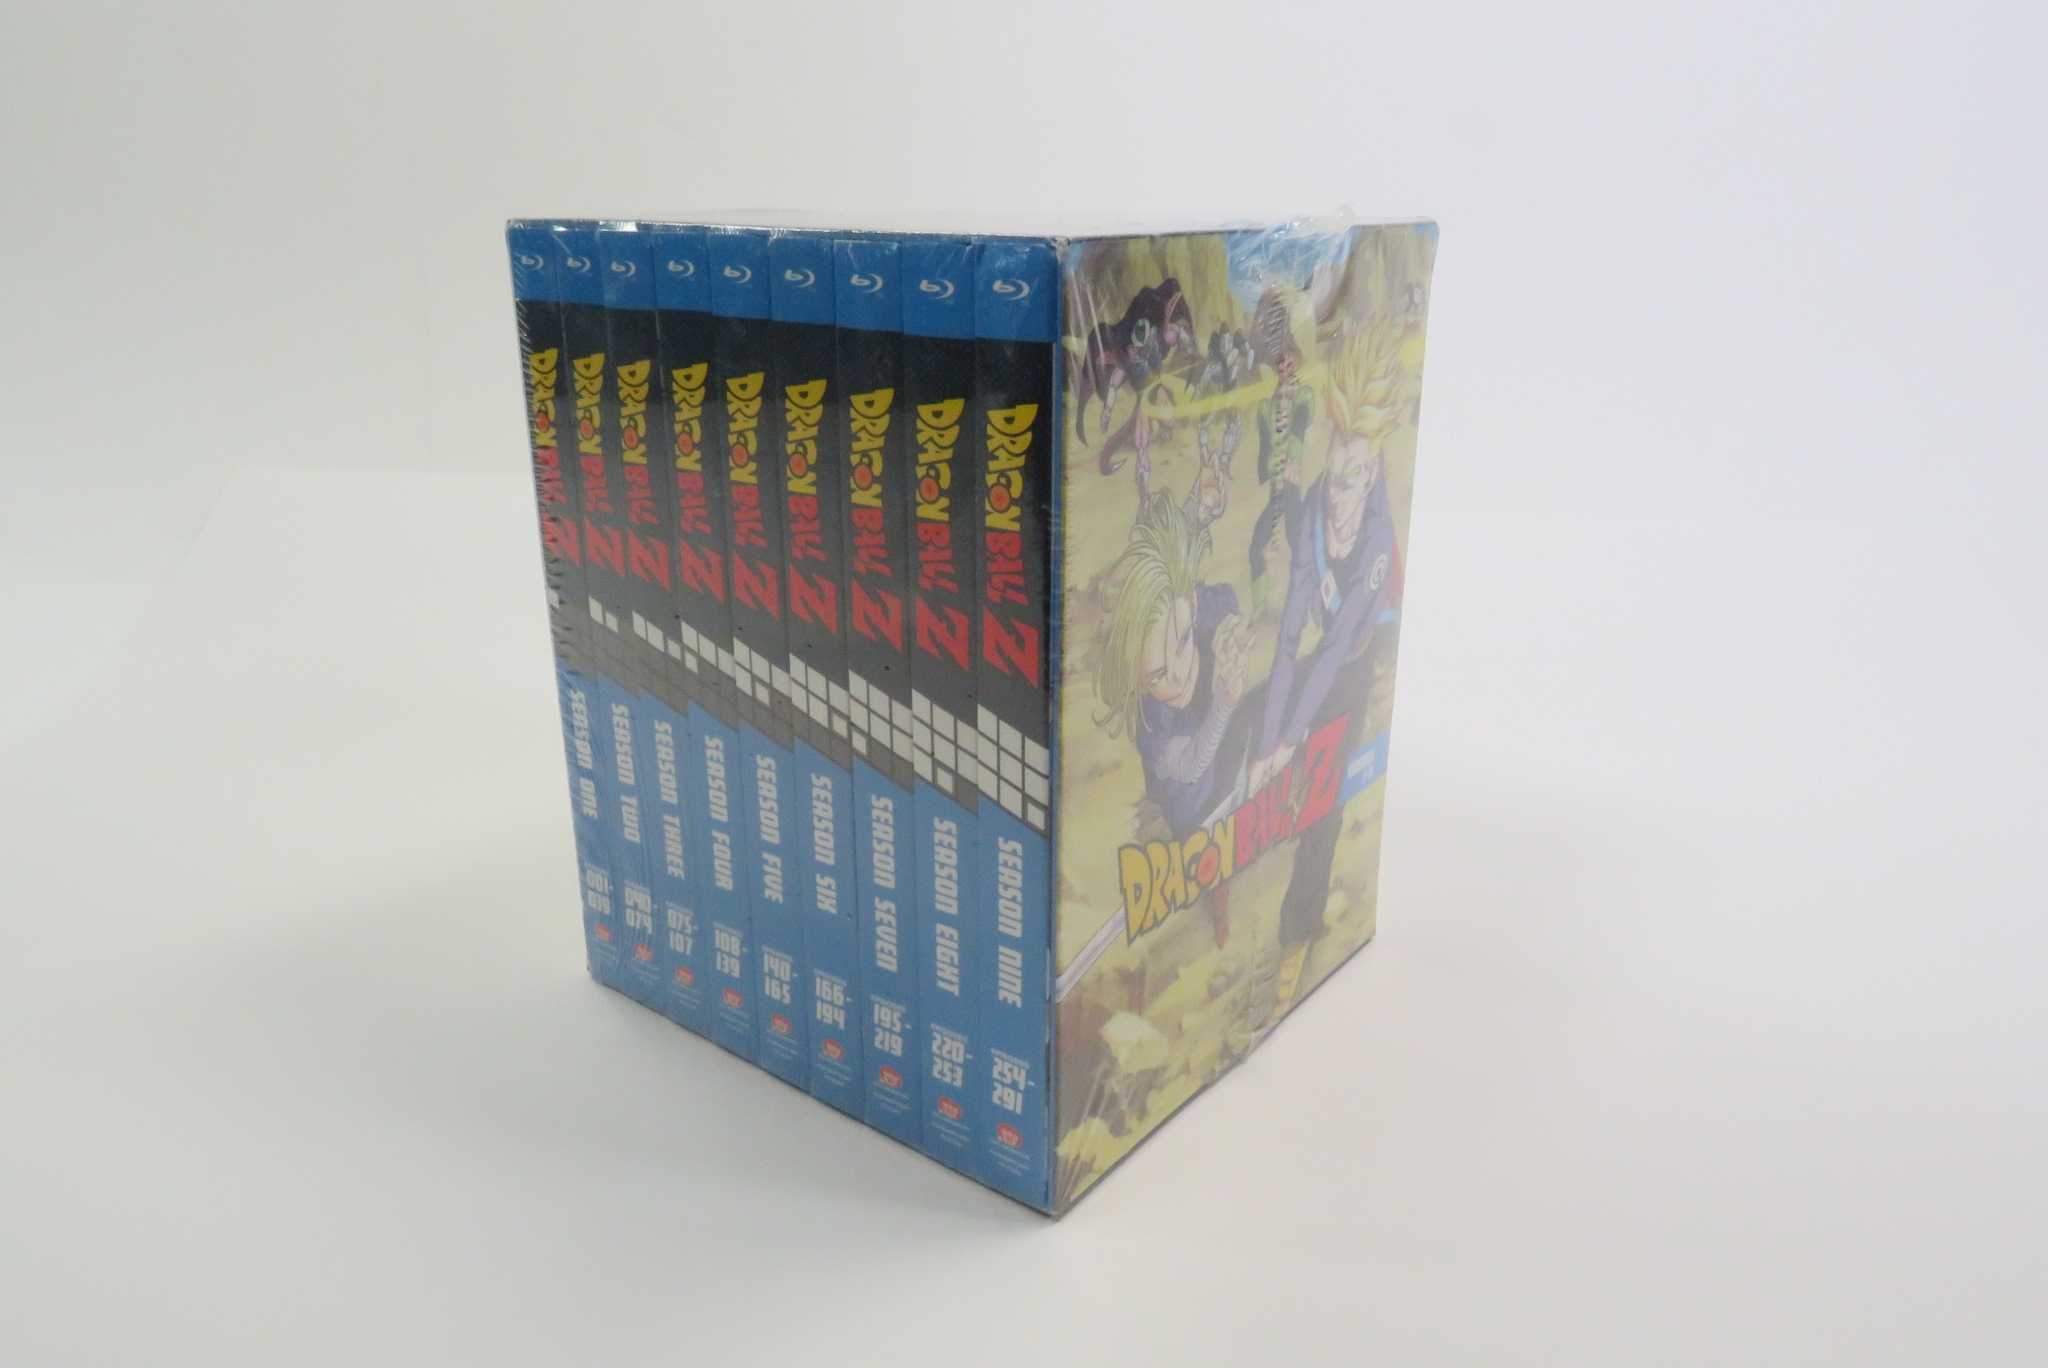 Dragonball Z Complete Seasons 1-9 Box sets (9 Box Sets)